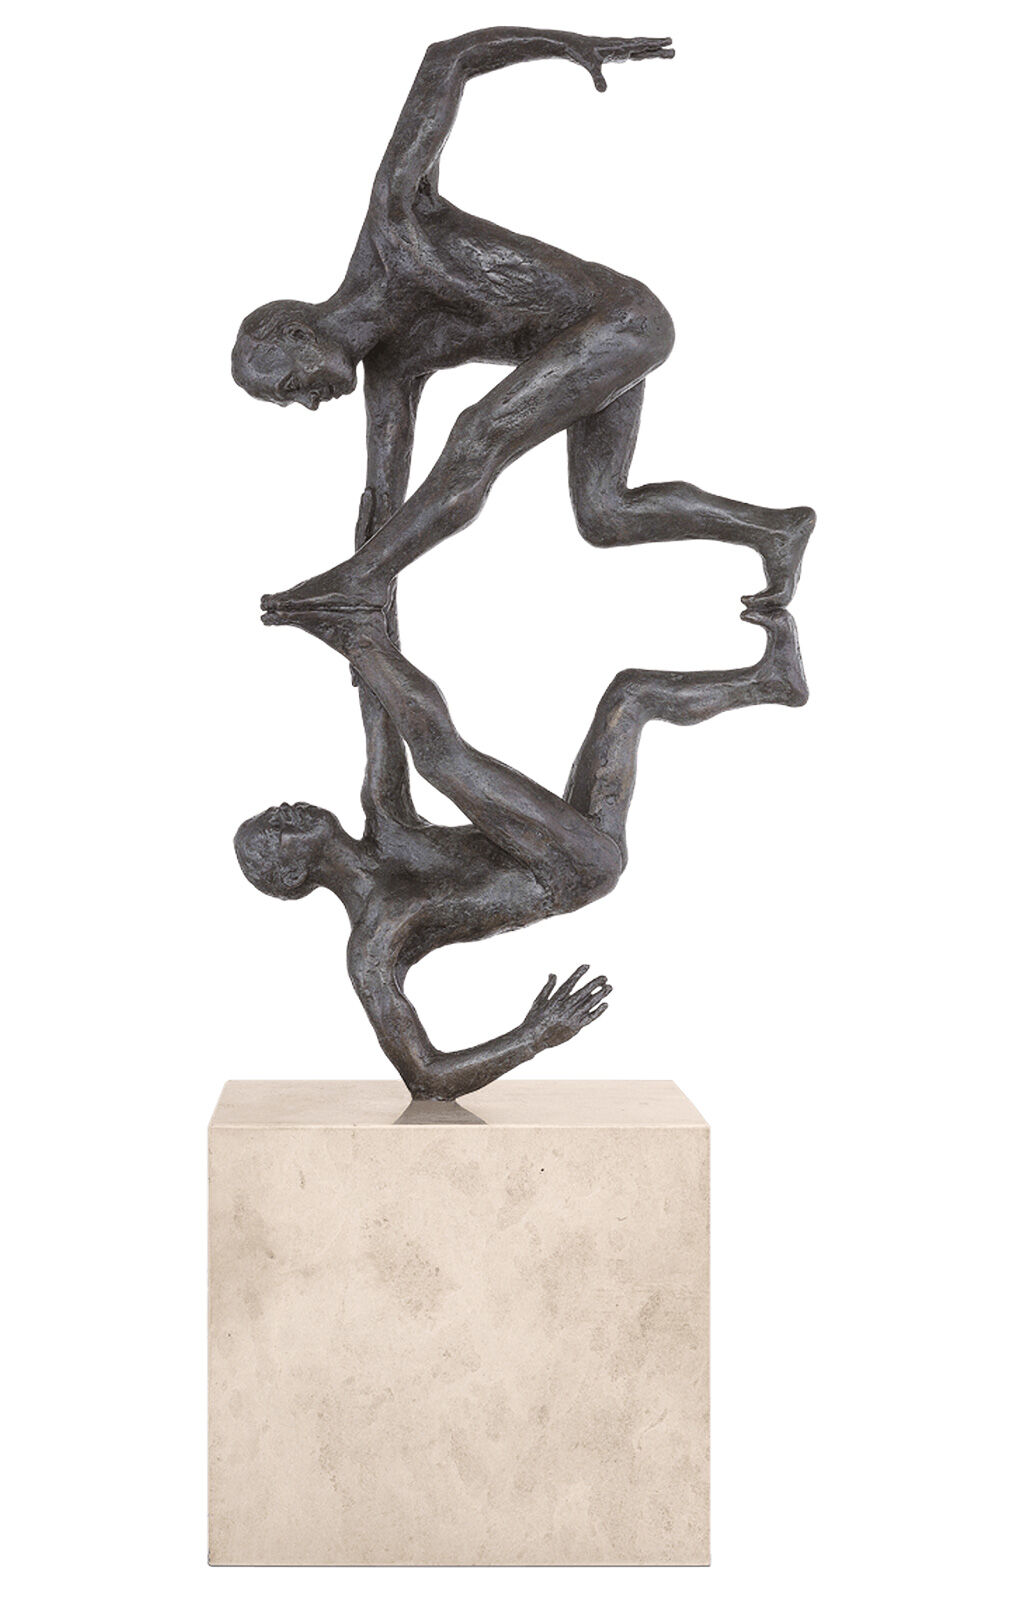 Sculpture "Angel Grip" (2013), bronze by Adelbert Heil